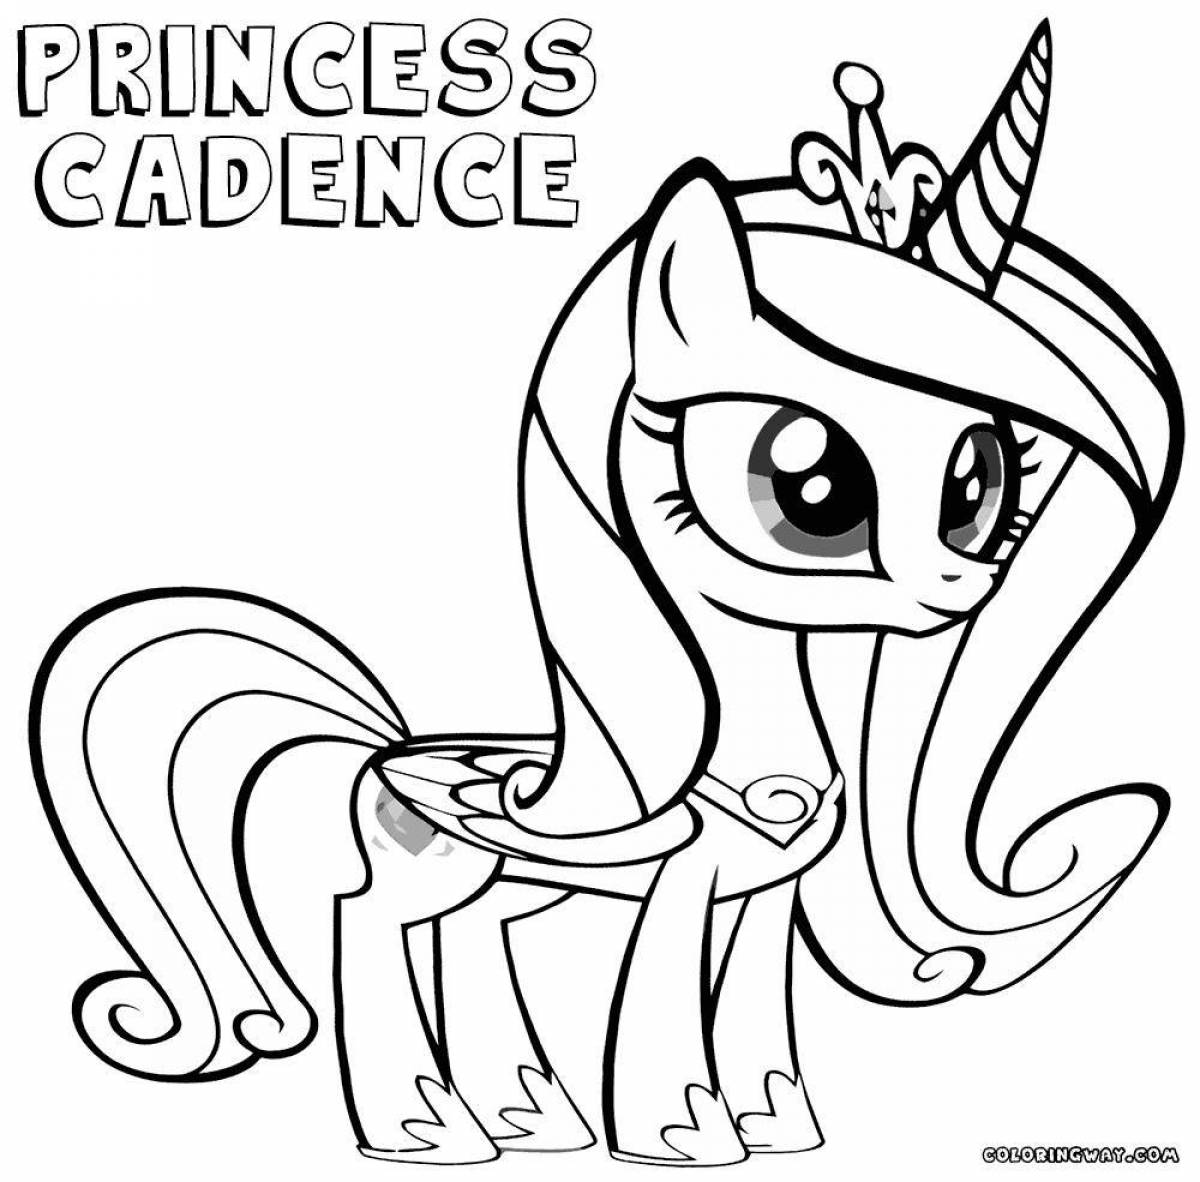 Charming princess cadence coloring page